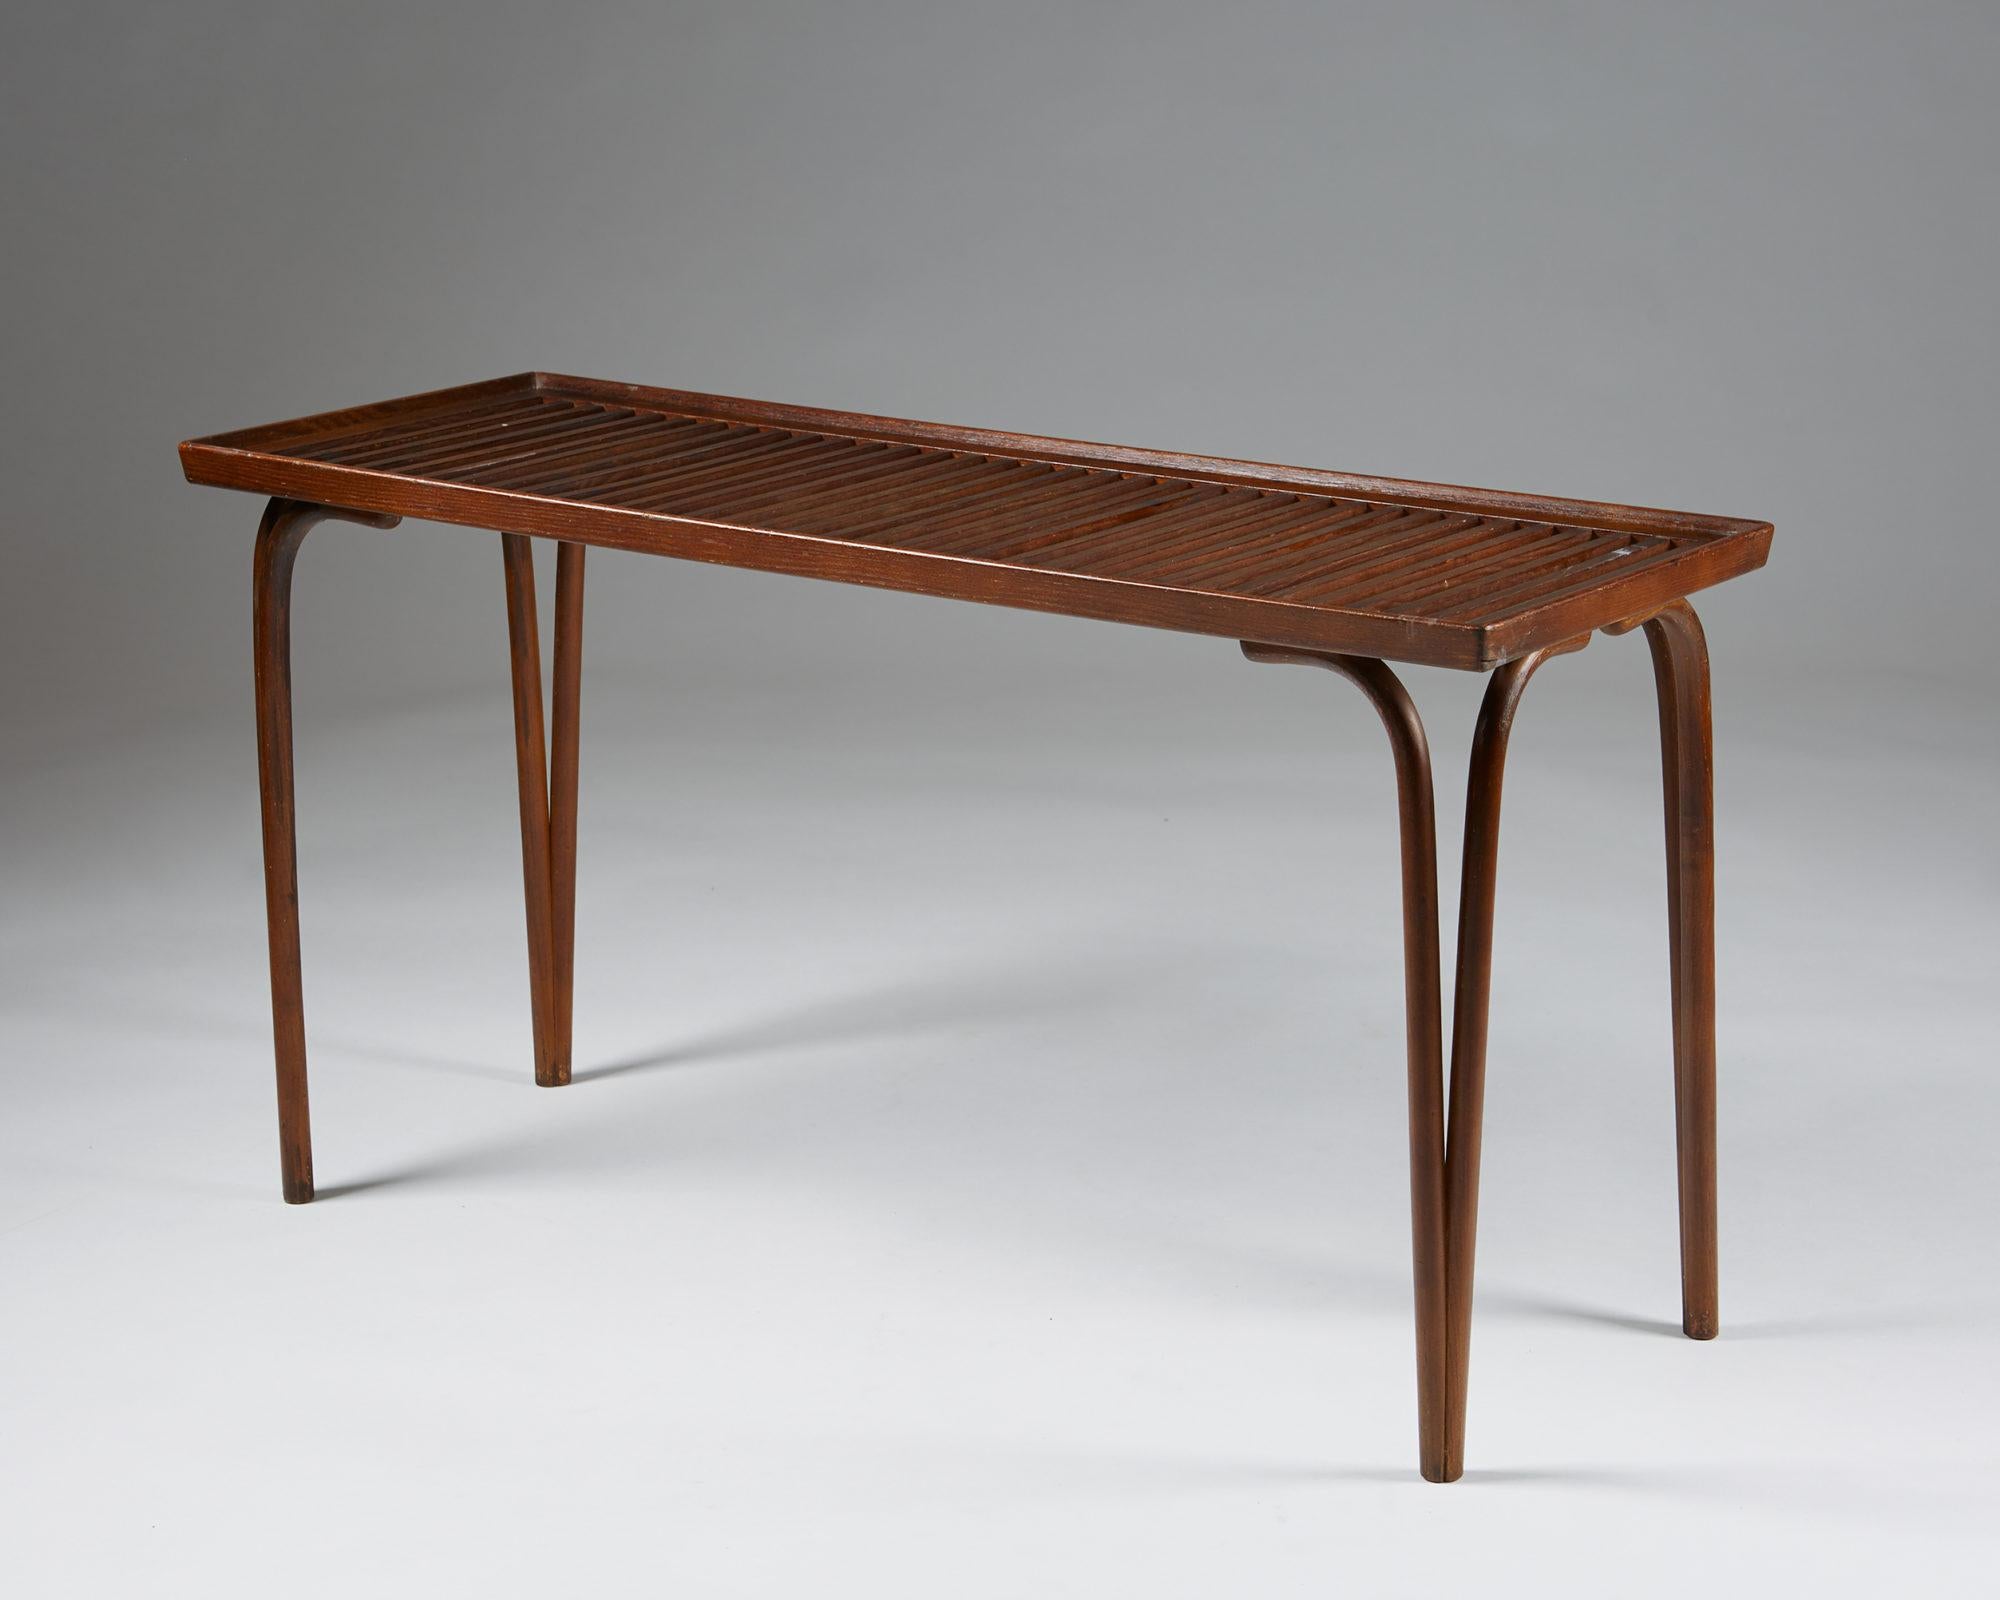 Side table designed by Carl Axel Acking for Svenska Möbelfabrikerna Bodafors,
Sweden. 1940's.

Stained oak.

Measurements: 
H: 56 cm/ 22''
L: 106 cm/ 3' 6''
D: 40 cm/ 15 3/4''